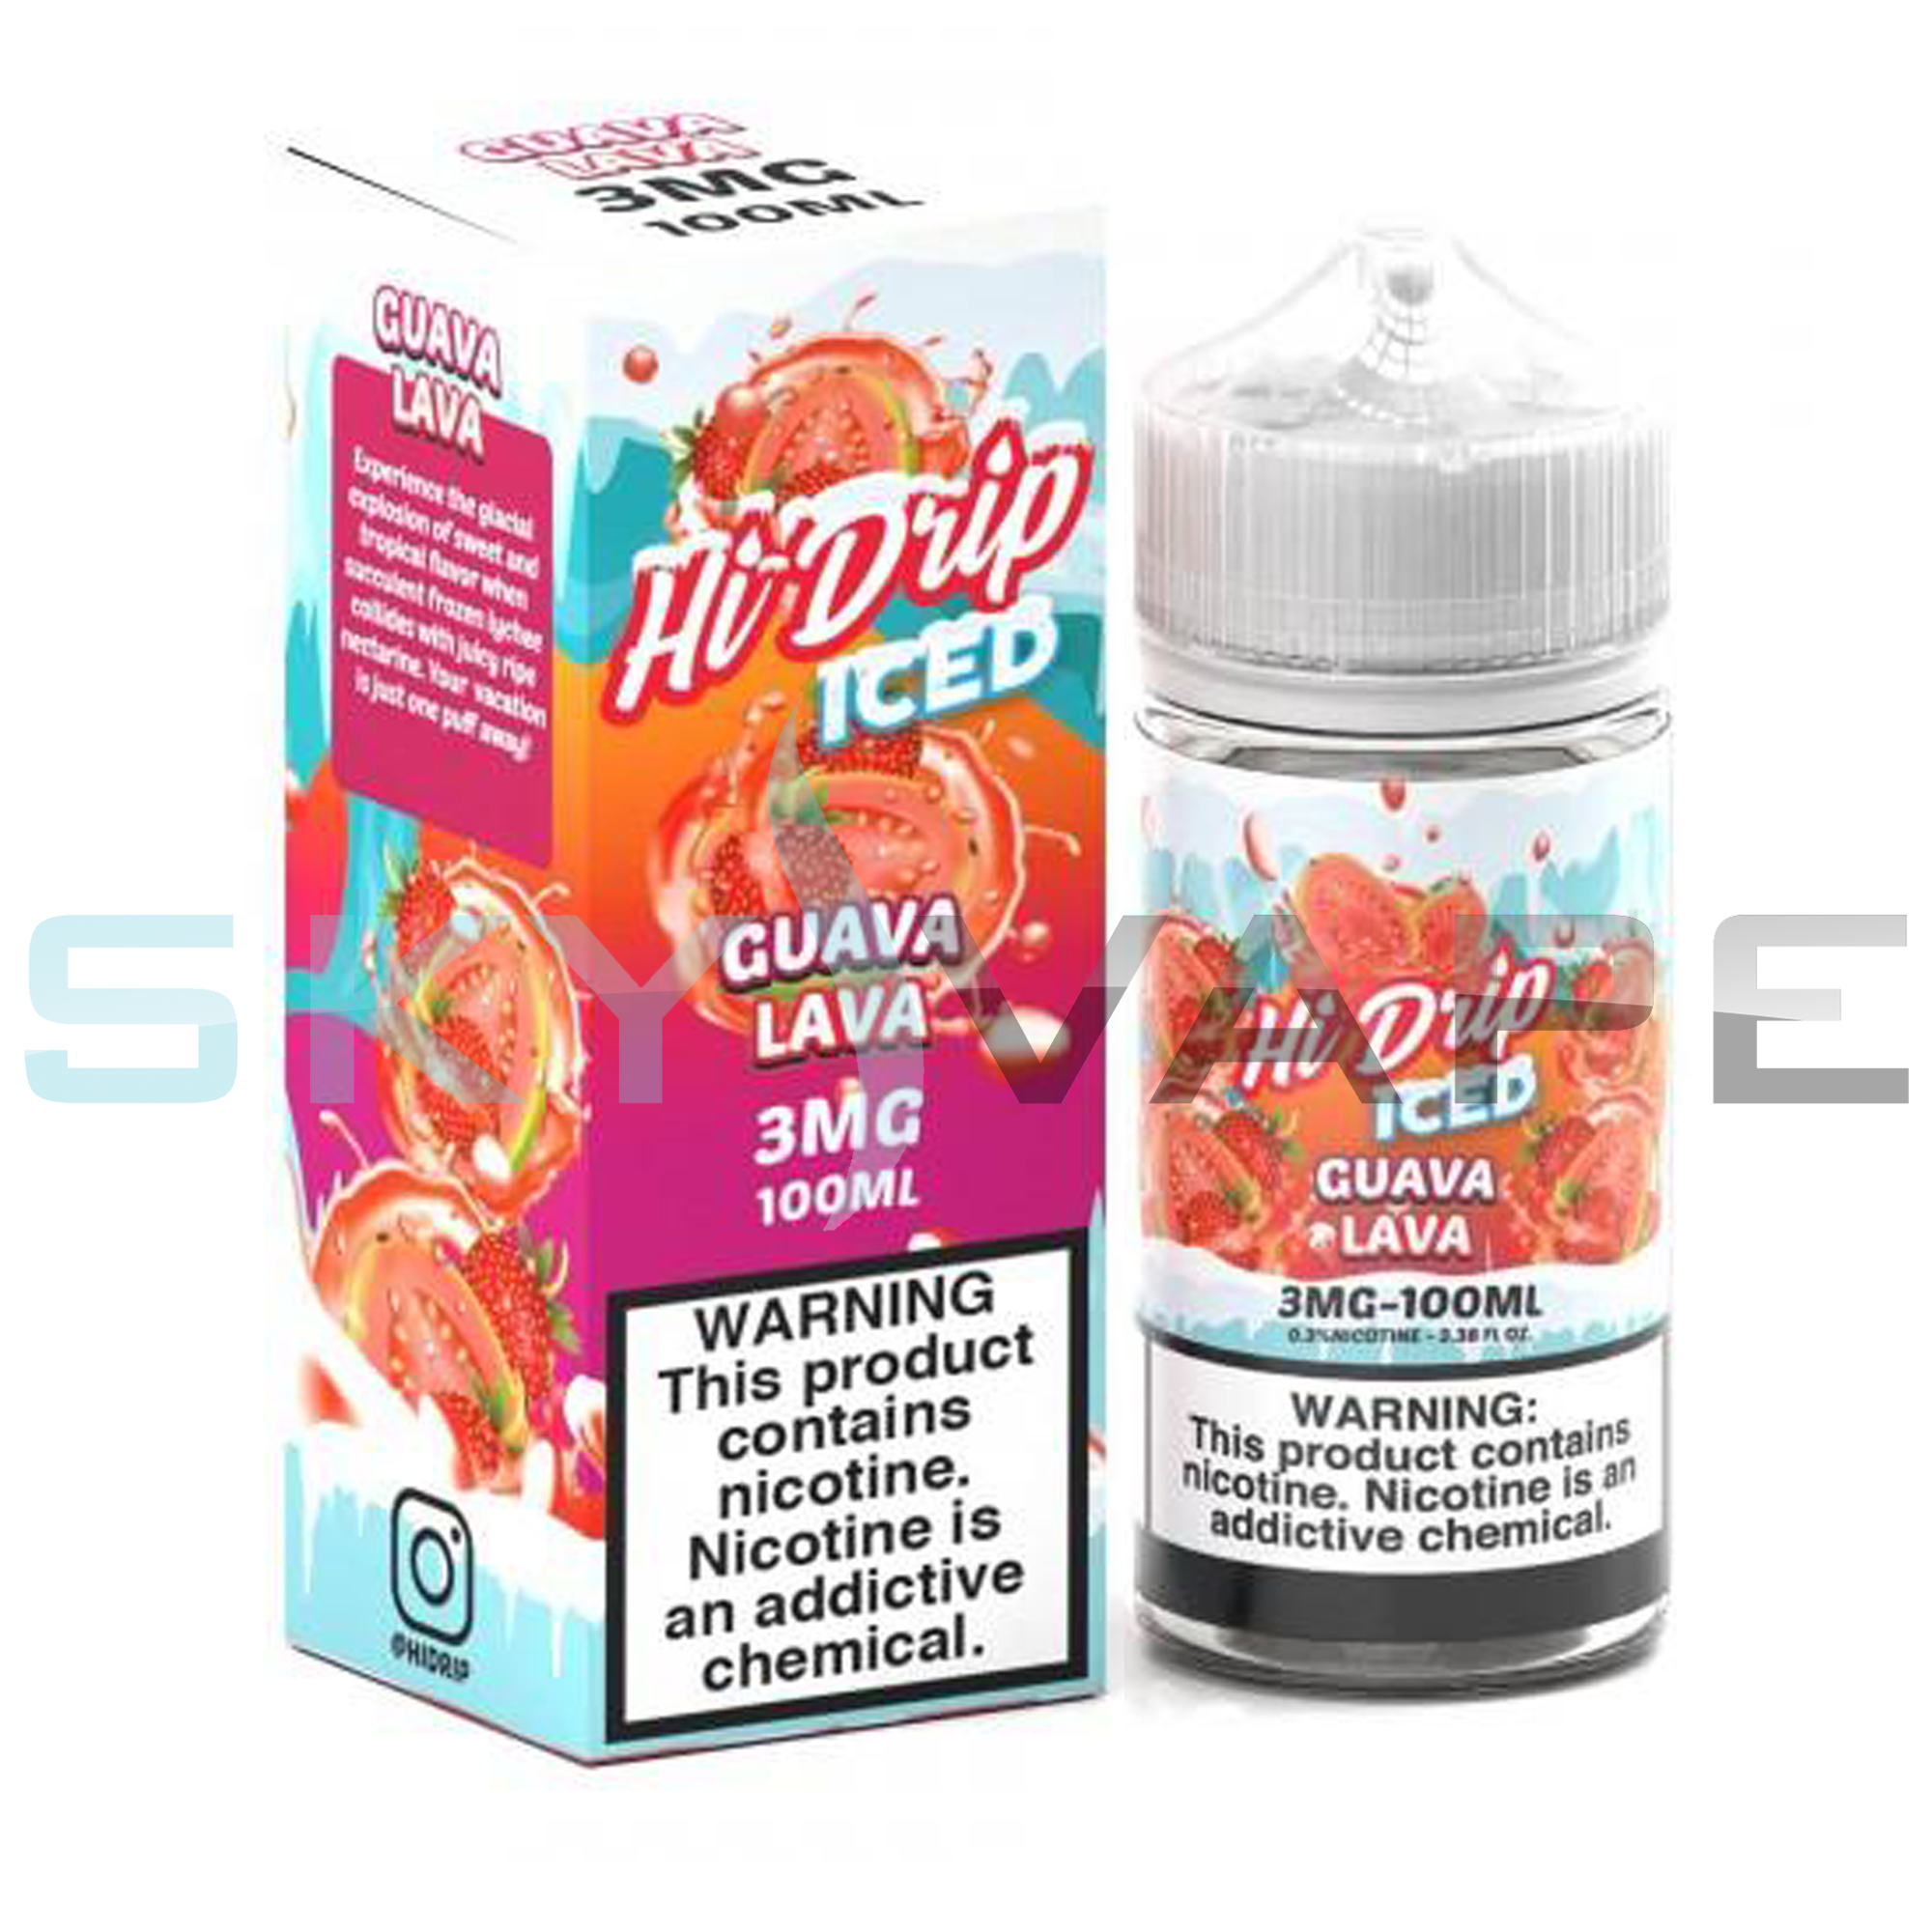 Hi-Drip Guava Lava Iced 100ML